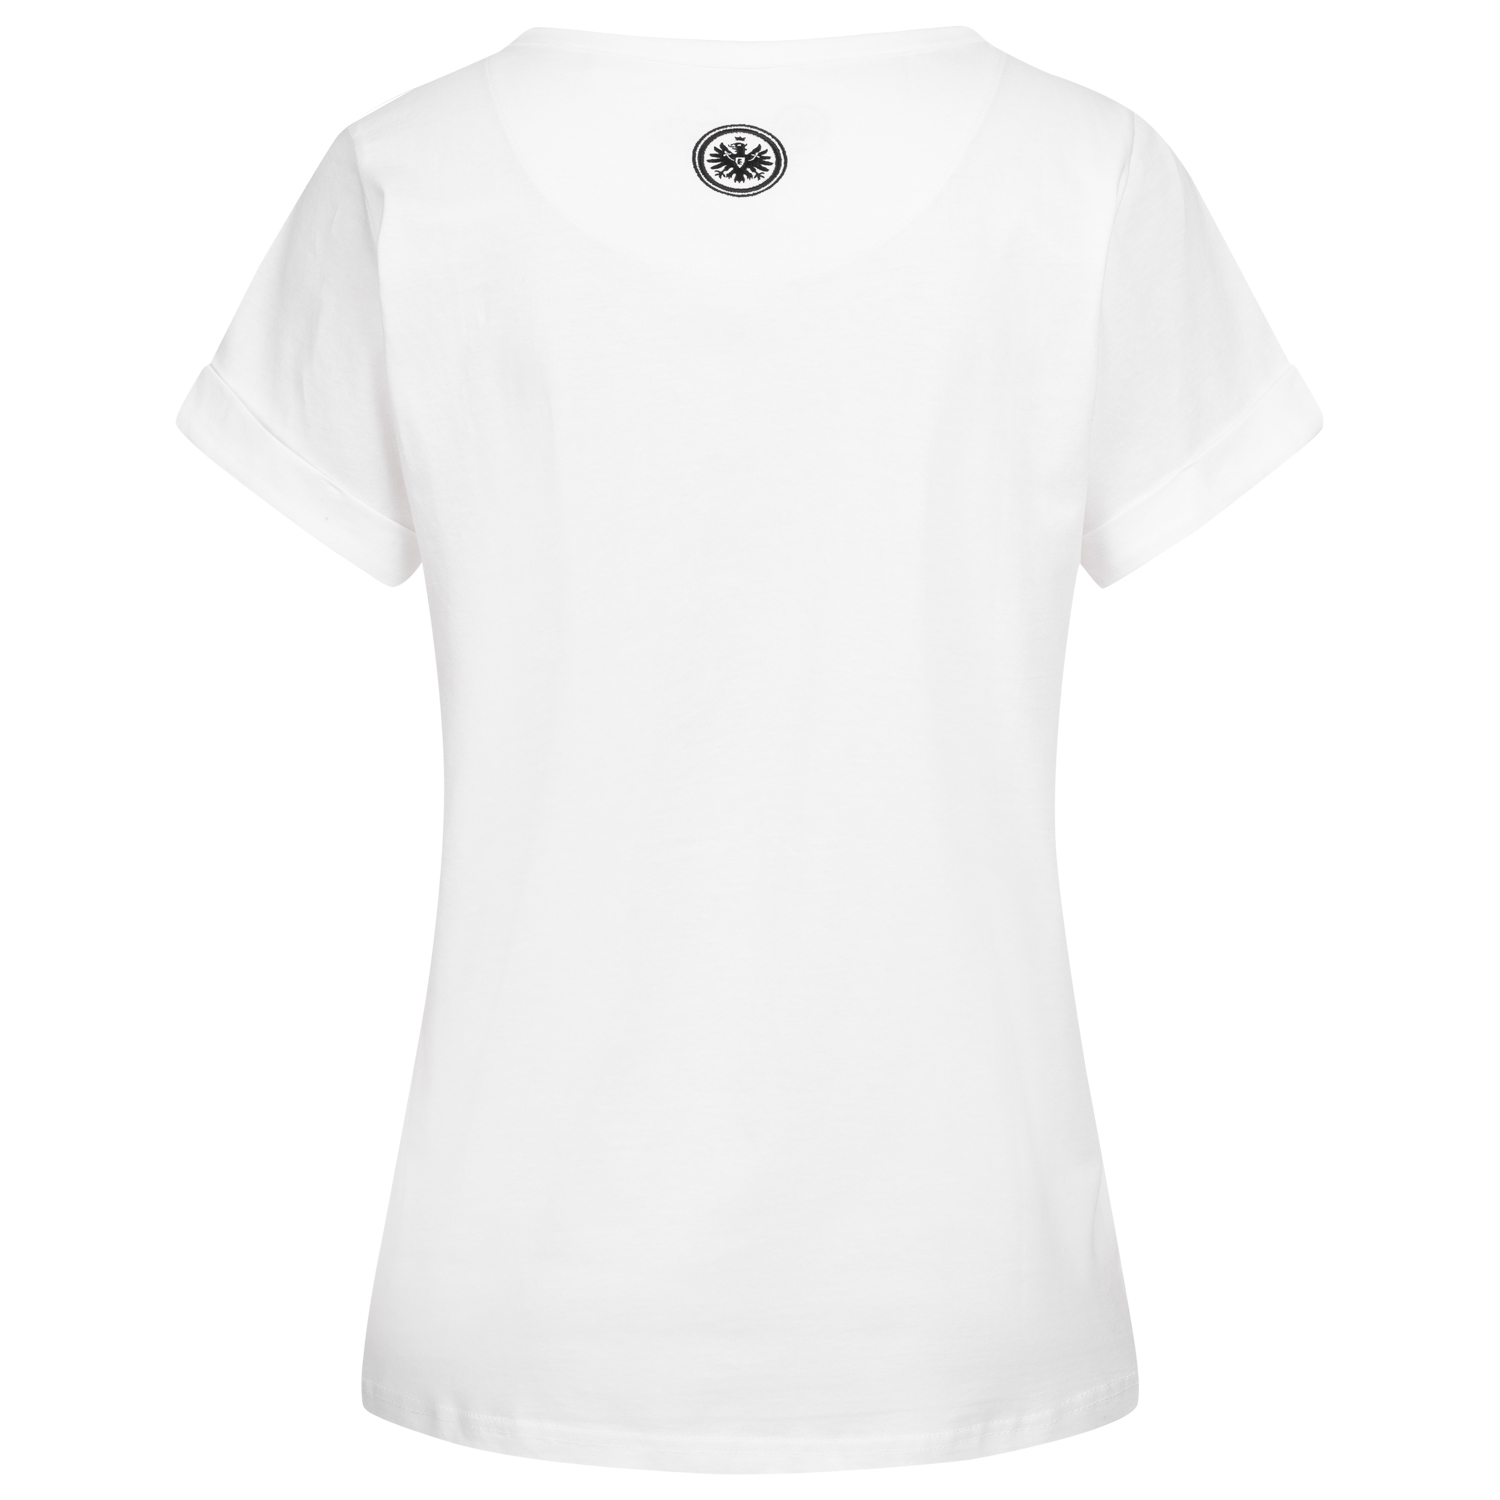 Bild 2: Damen Shirt Logo Badge White